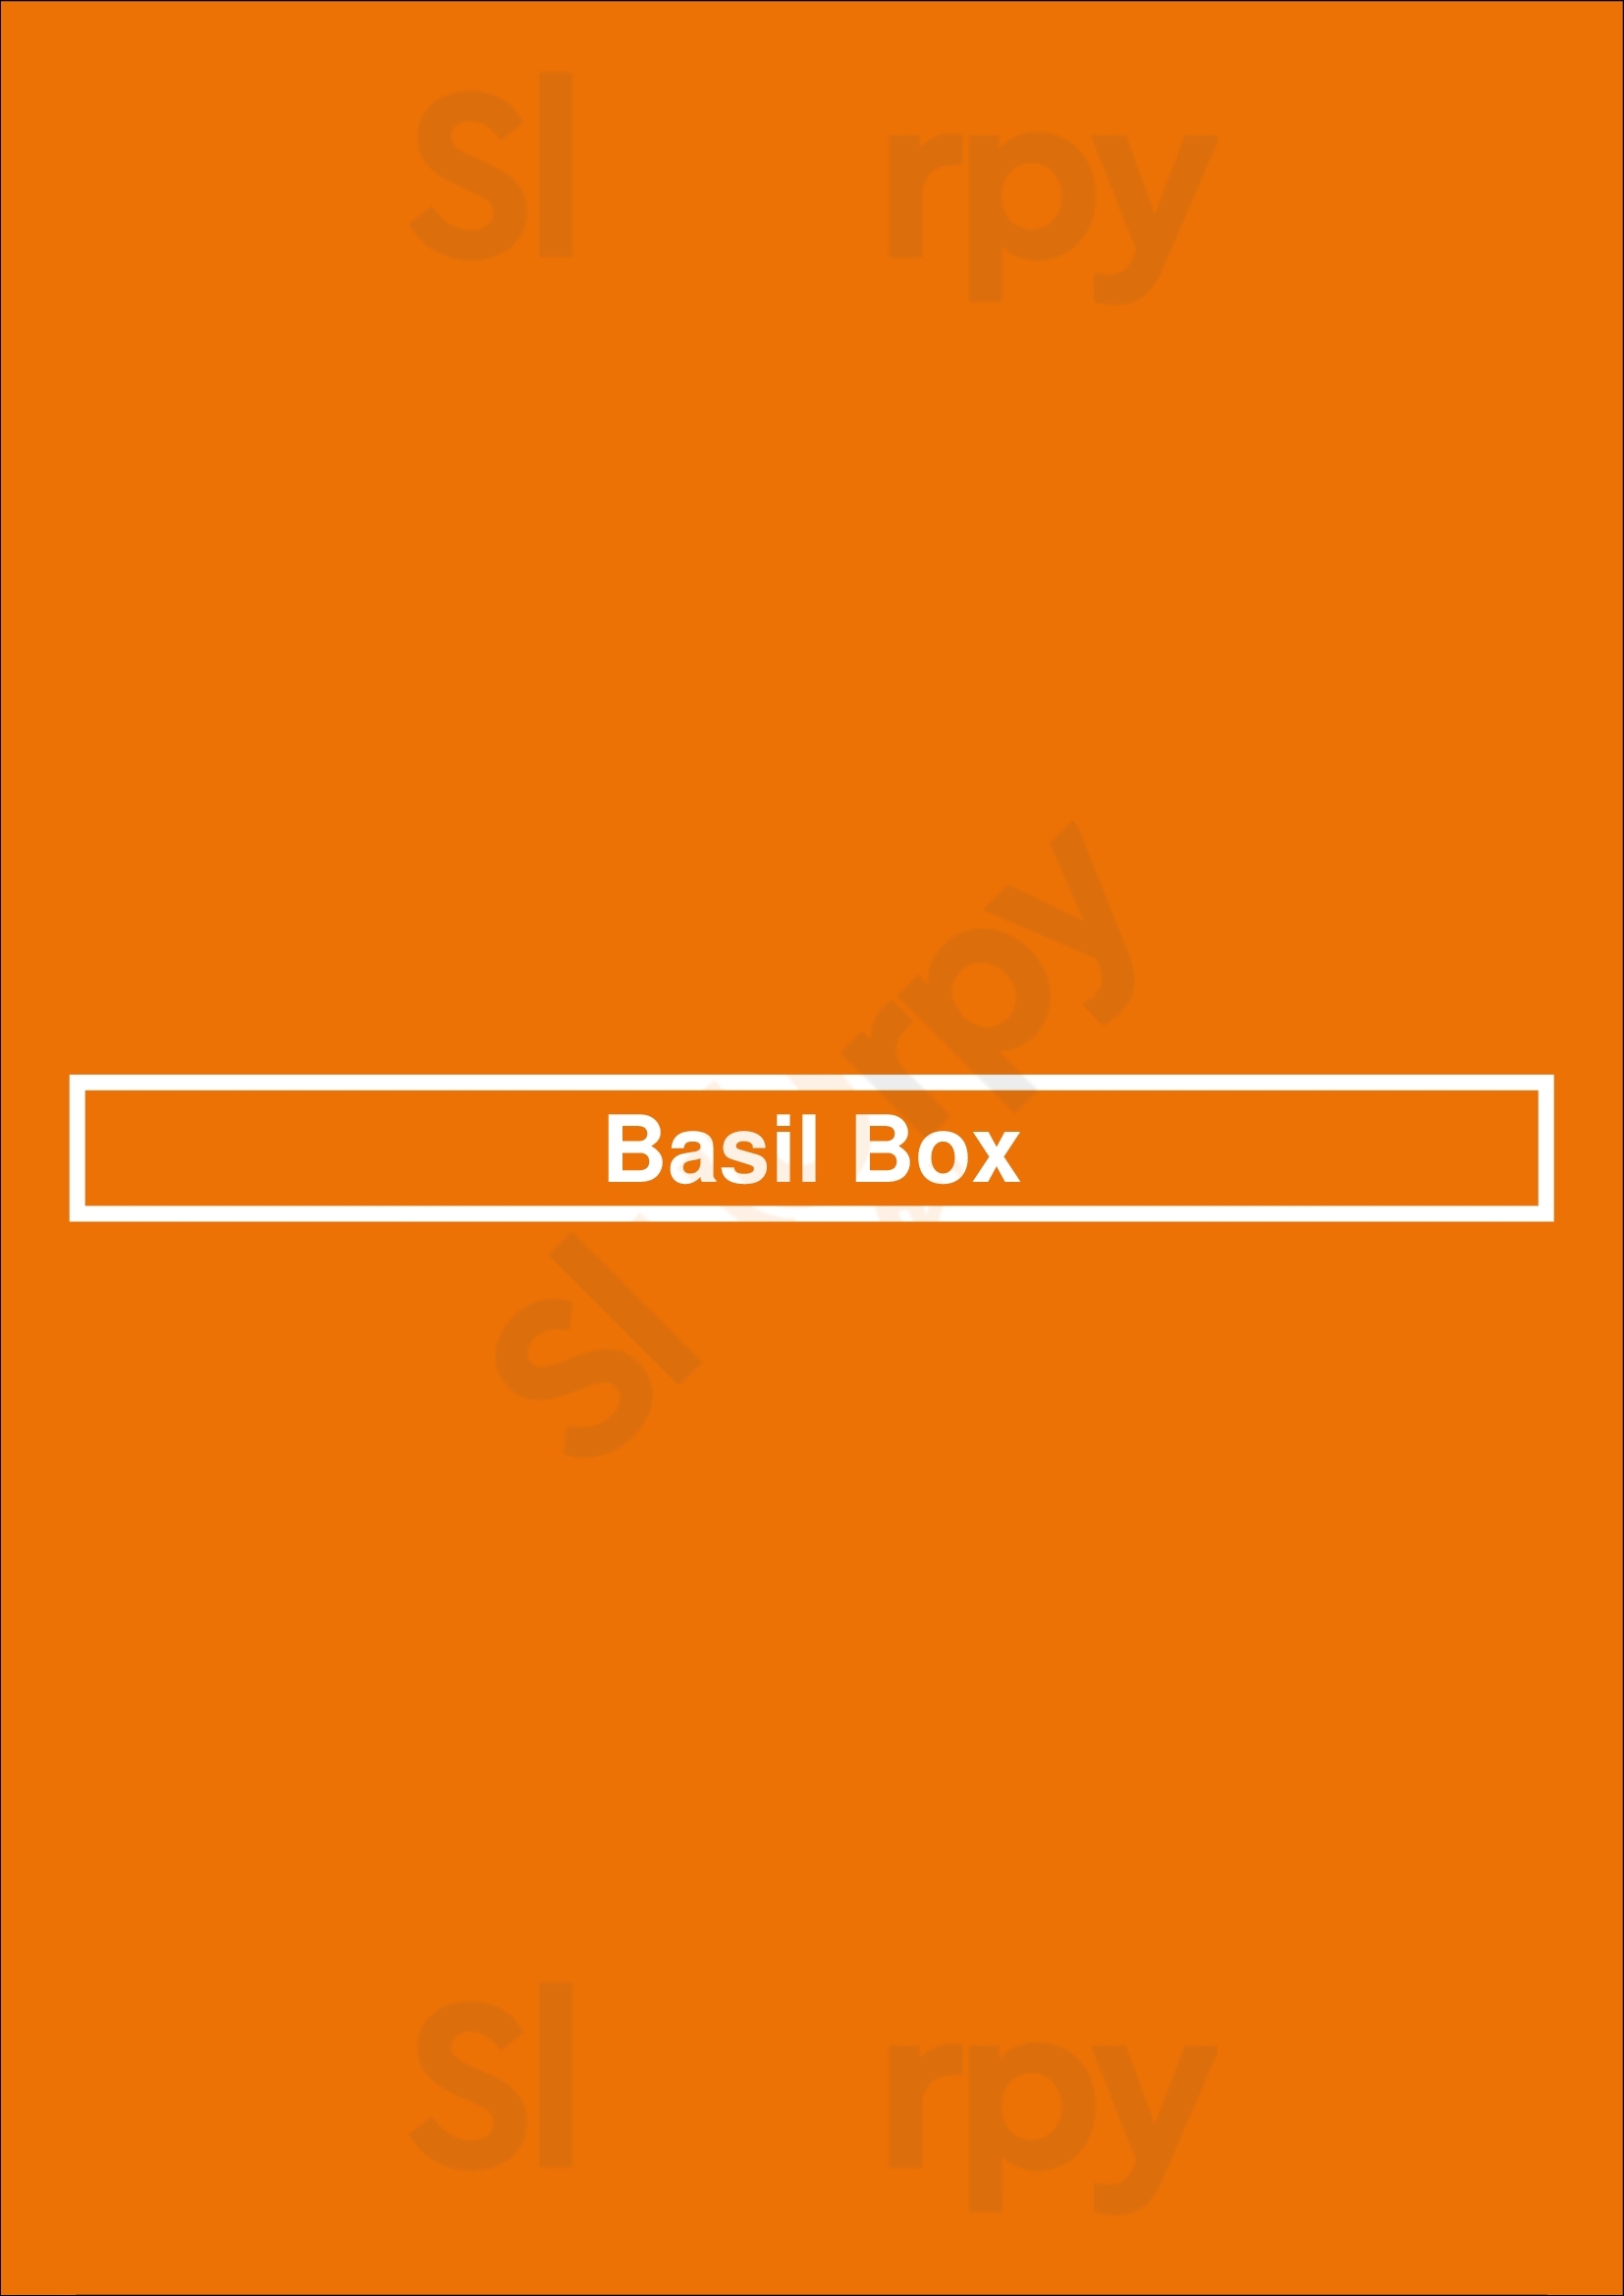 Basil Box Toronto Menu - 1